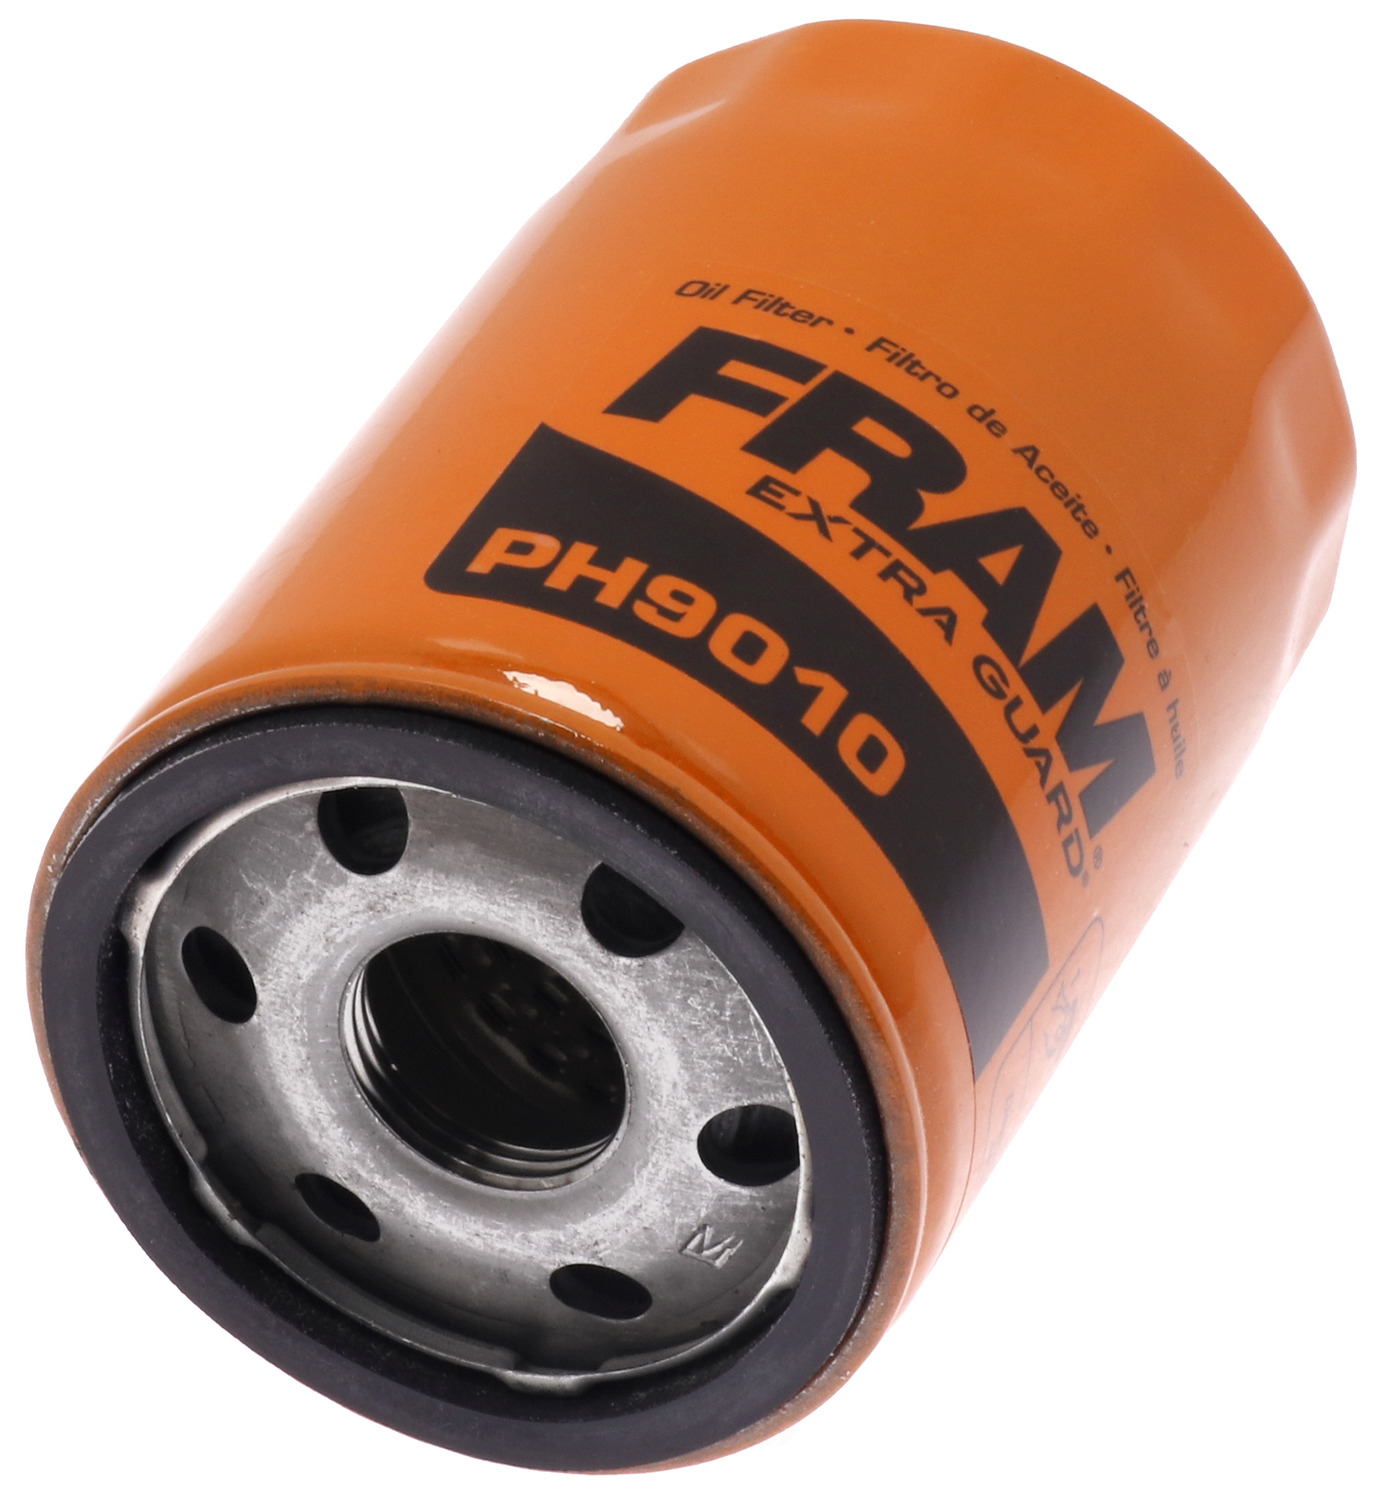 FRAM - Extra Guard Engine Oil Filter - FRA PH9010